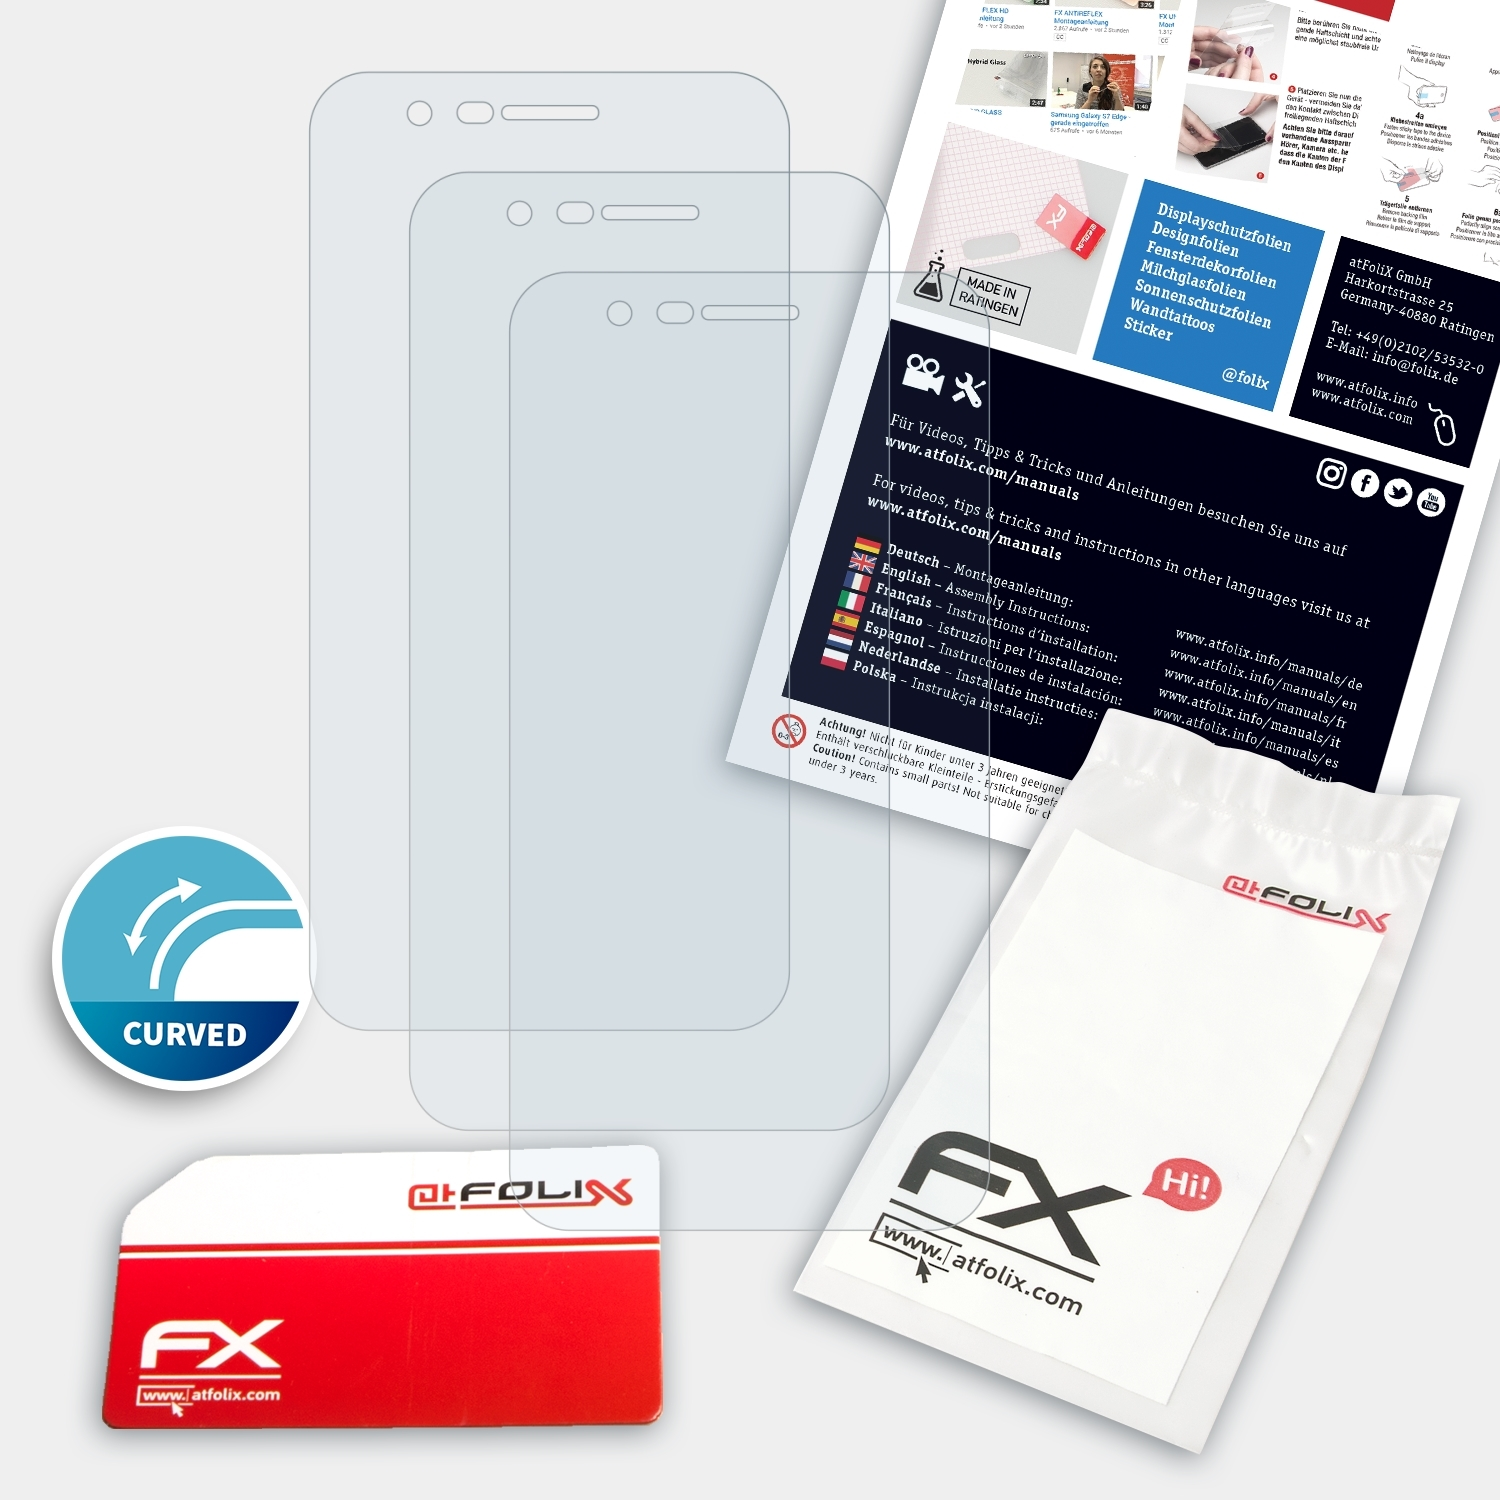 3x ATFOLIX Plus) LG FX-ActiFleX Displayschutz(für K11